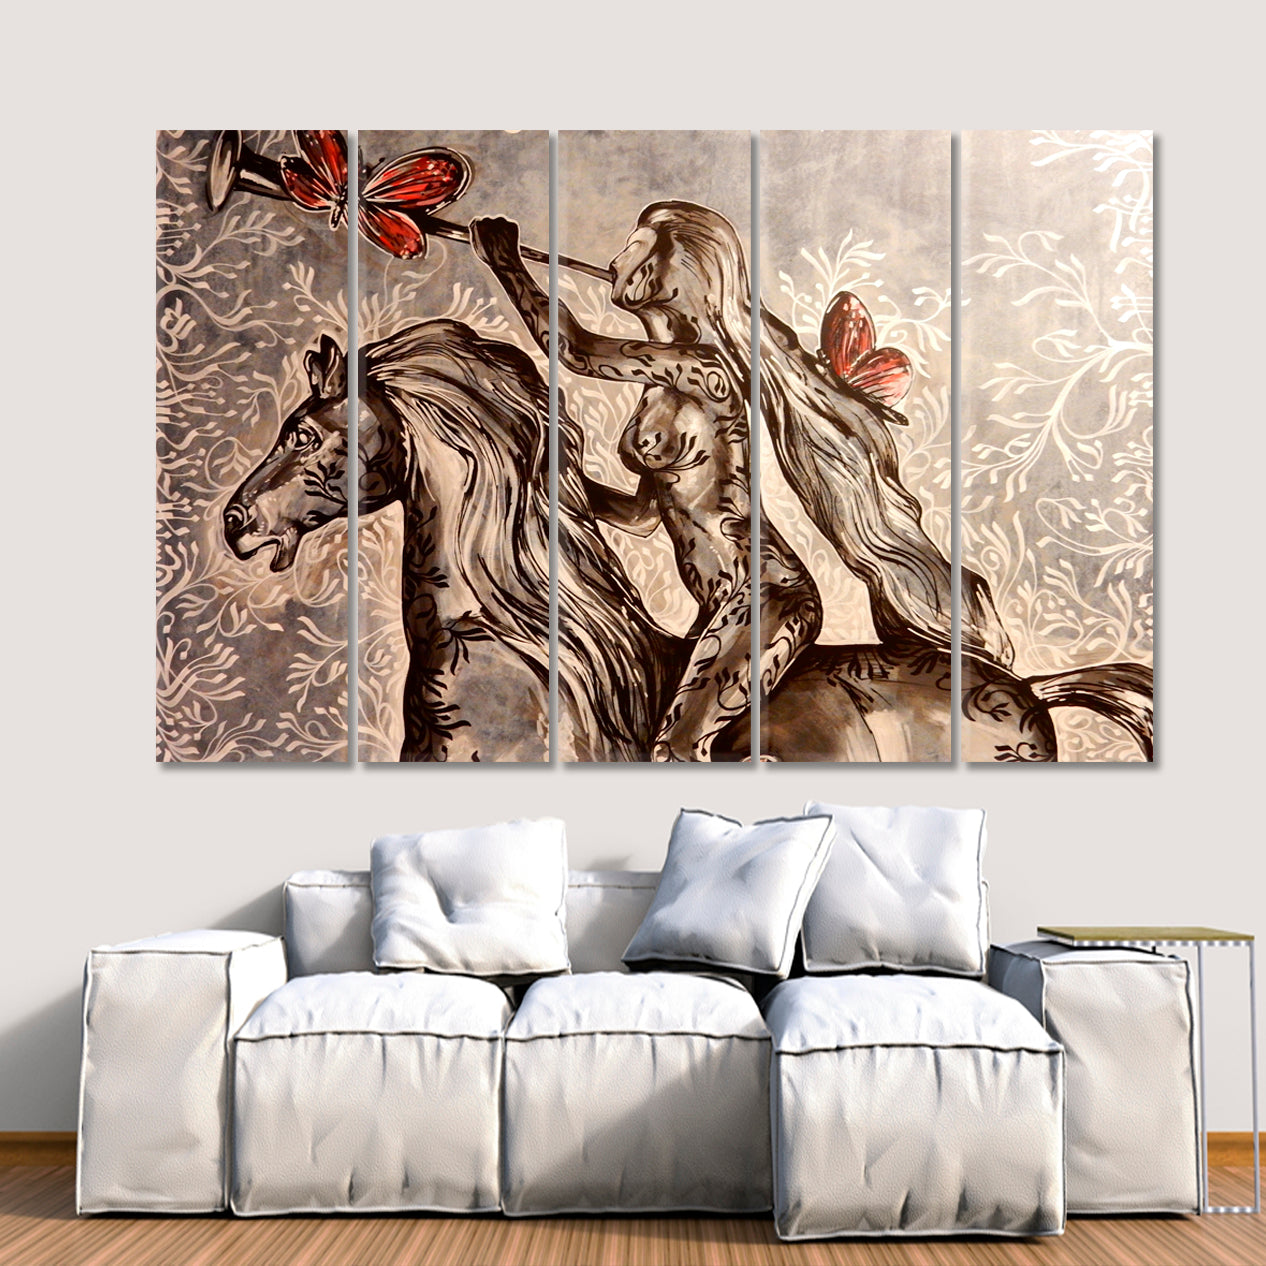 GORGEOUS HORSEWOMAN BEAUTIFUL AMAZON Fine Art Brown Tones Fine Art Artesty 5 panels 36" x 24" 